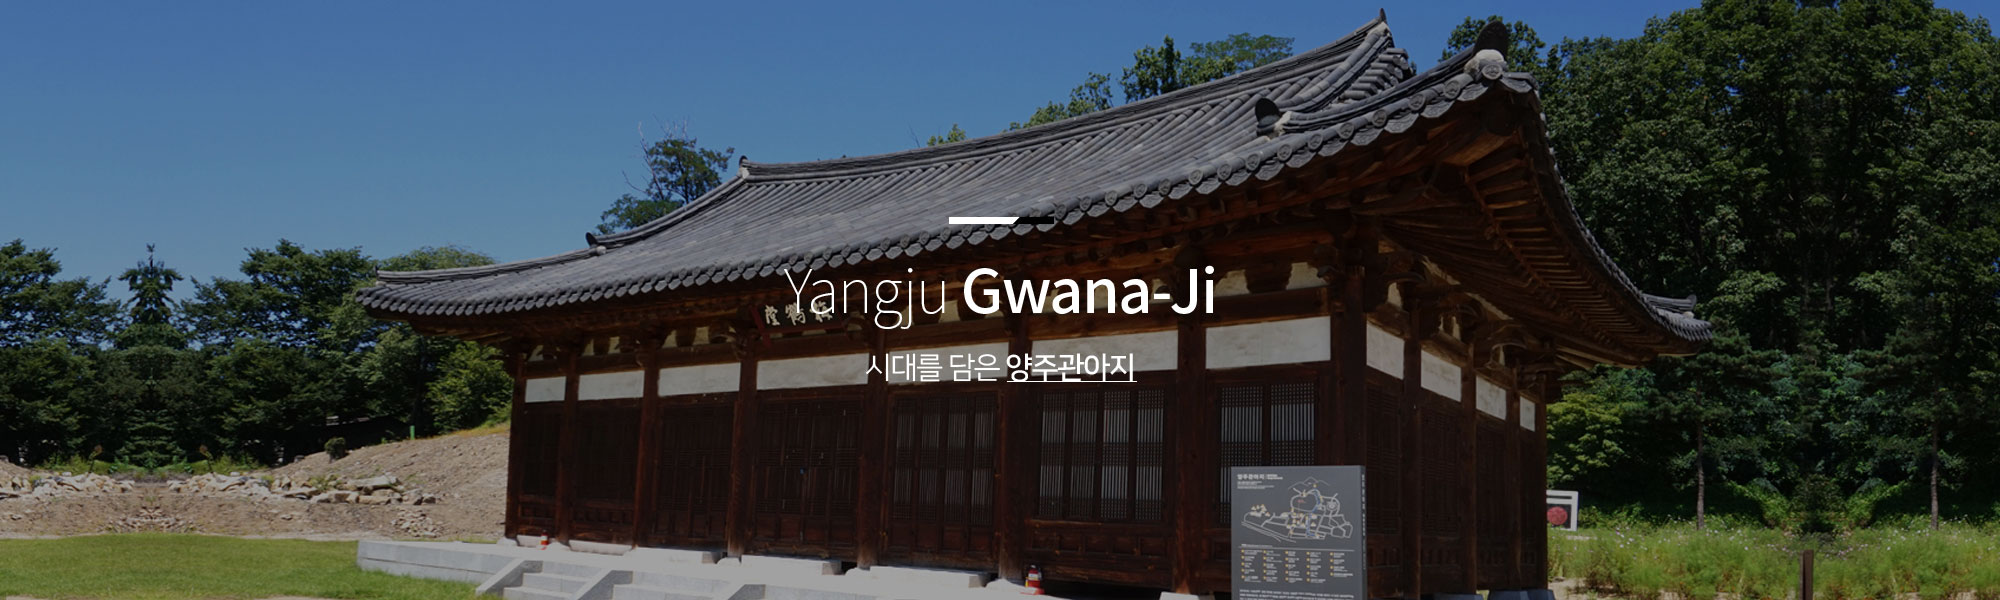 Yangju Gwana-Ji 시대를 담은 양주관아지